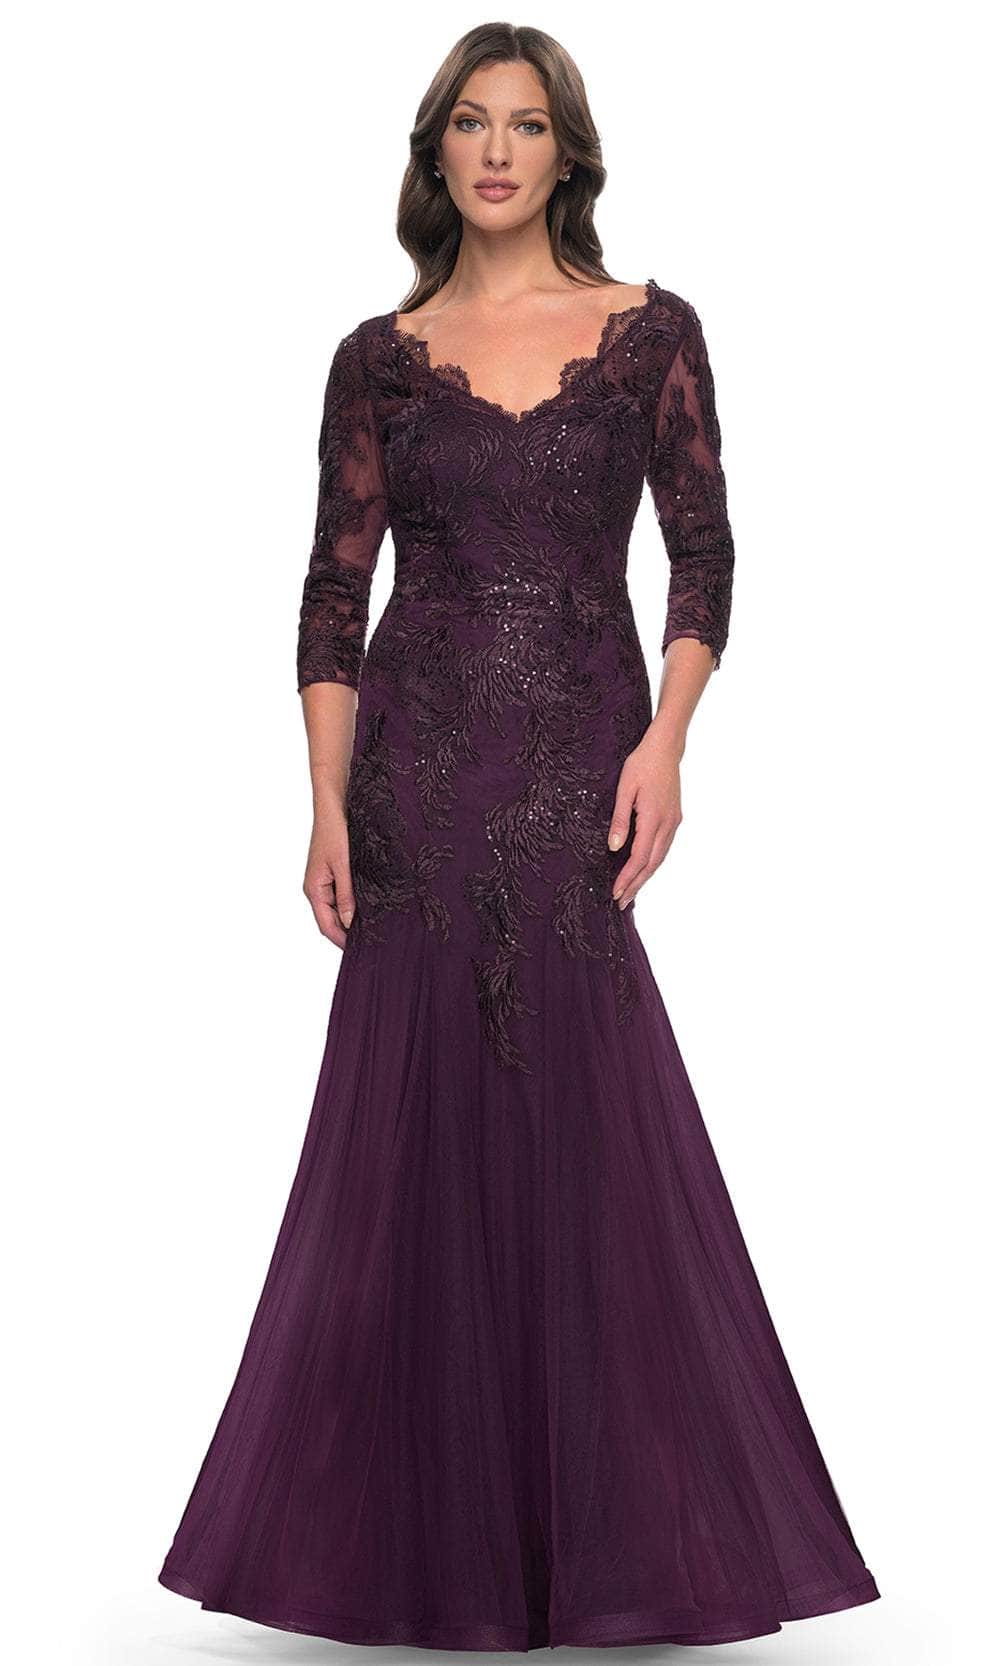 La Femme 30823 - Scallop Detailed Evening Dress Mother of the Bride Dresses 4 / Dark Berry